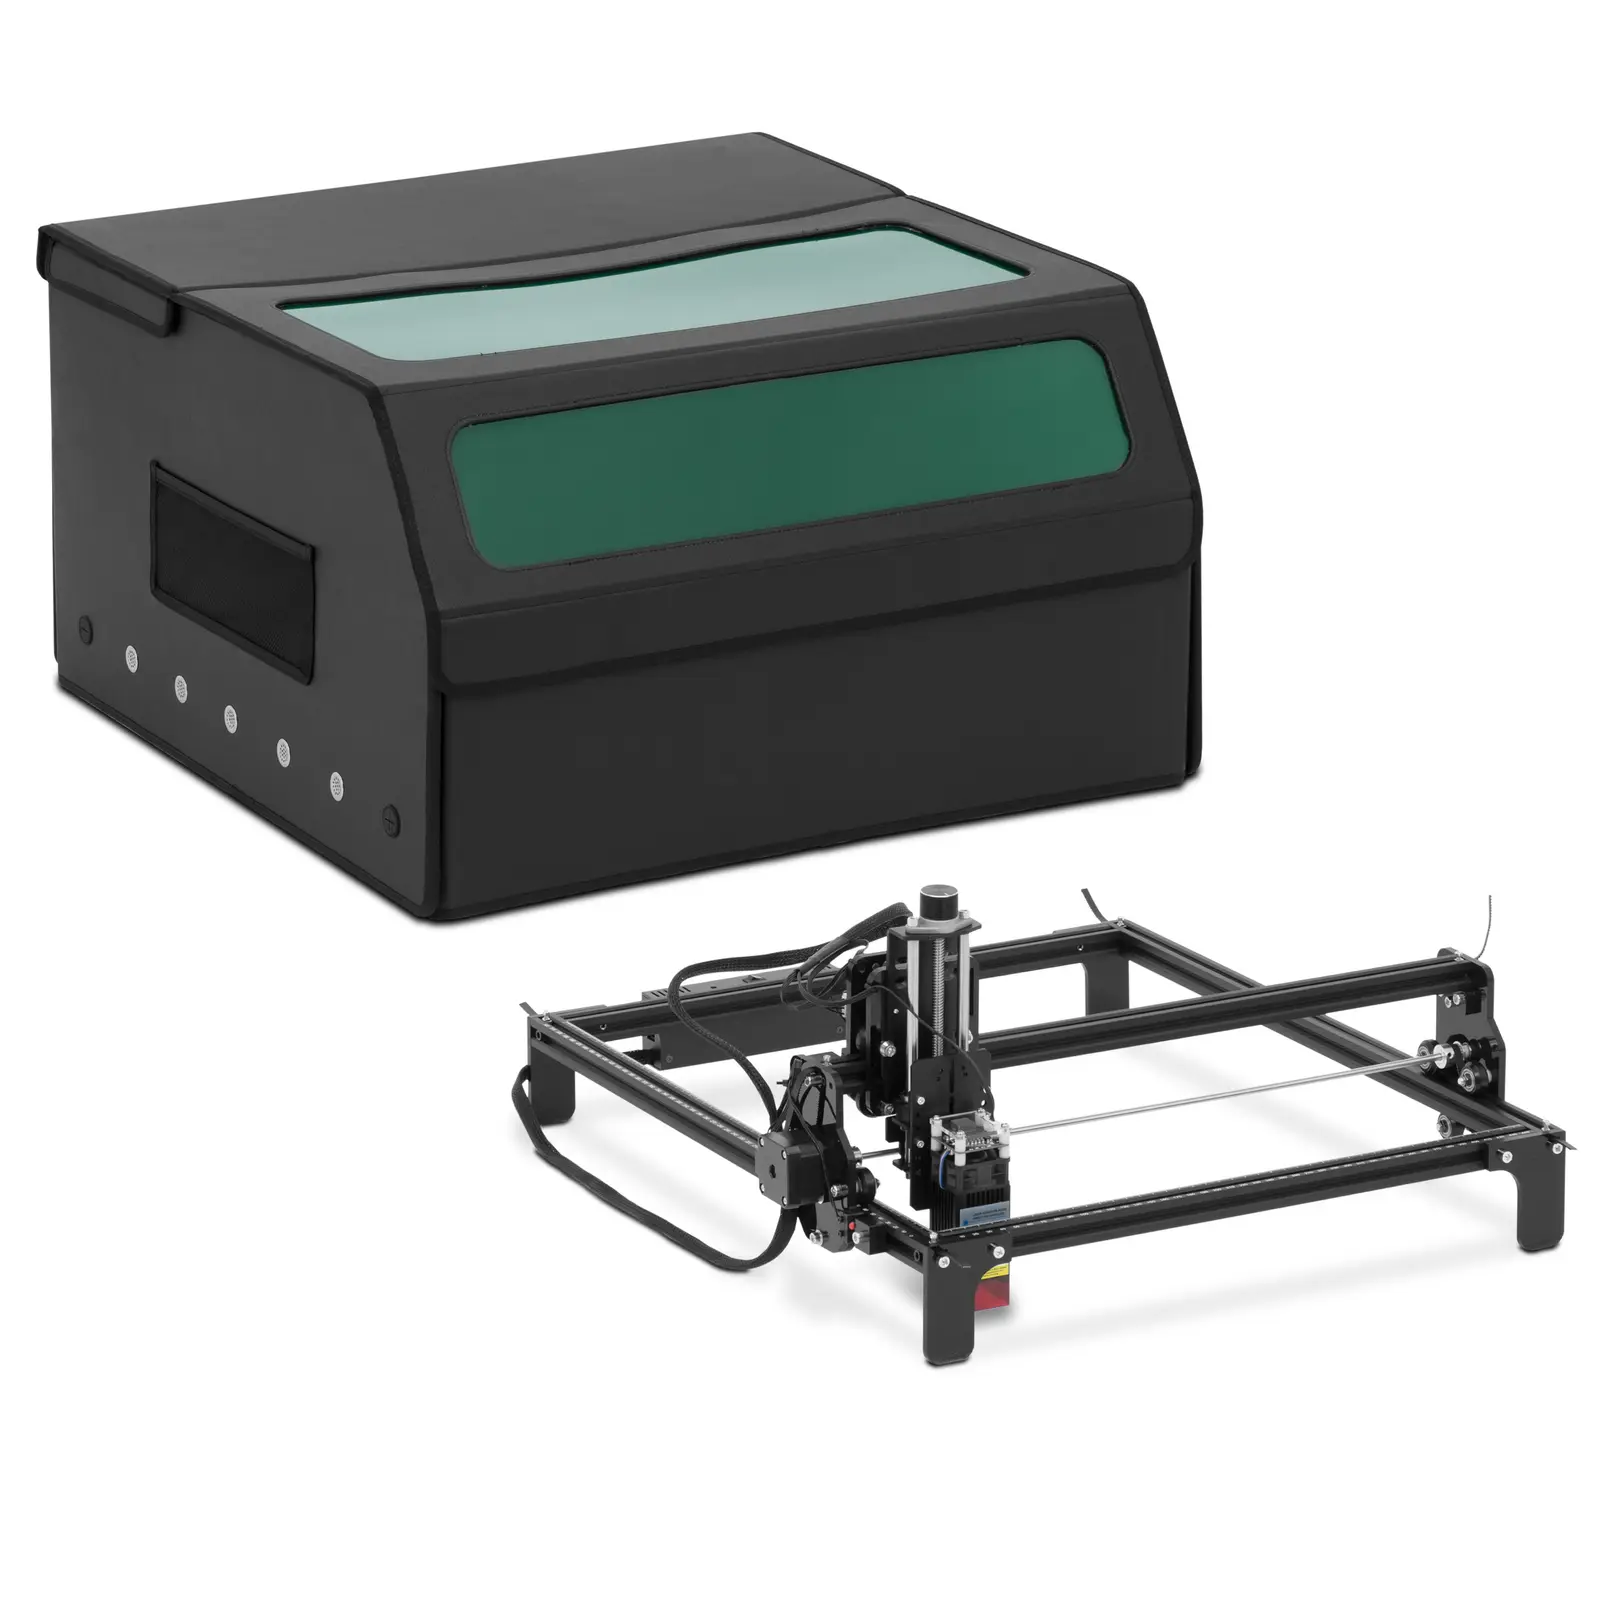 Lasergraveringsmaskine inkl. låg - lasereffekt: 20 W - 42 x 40 cm